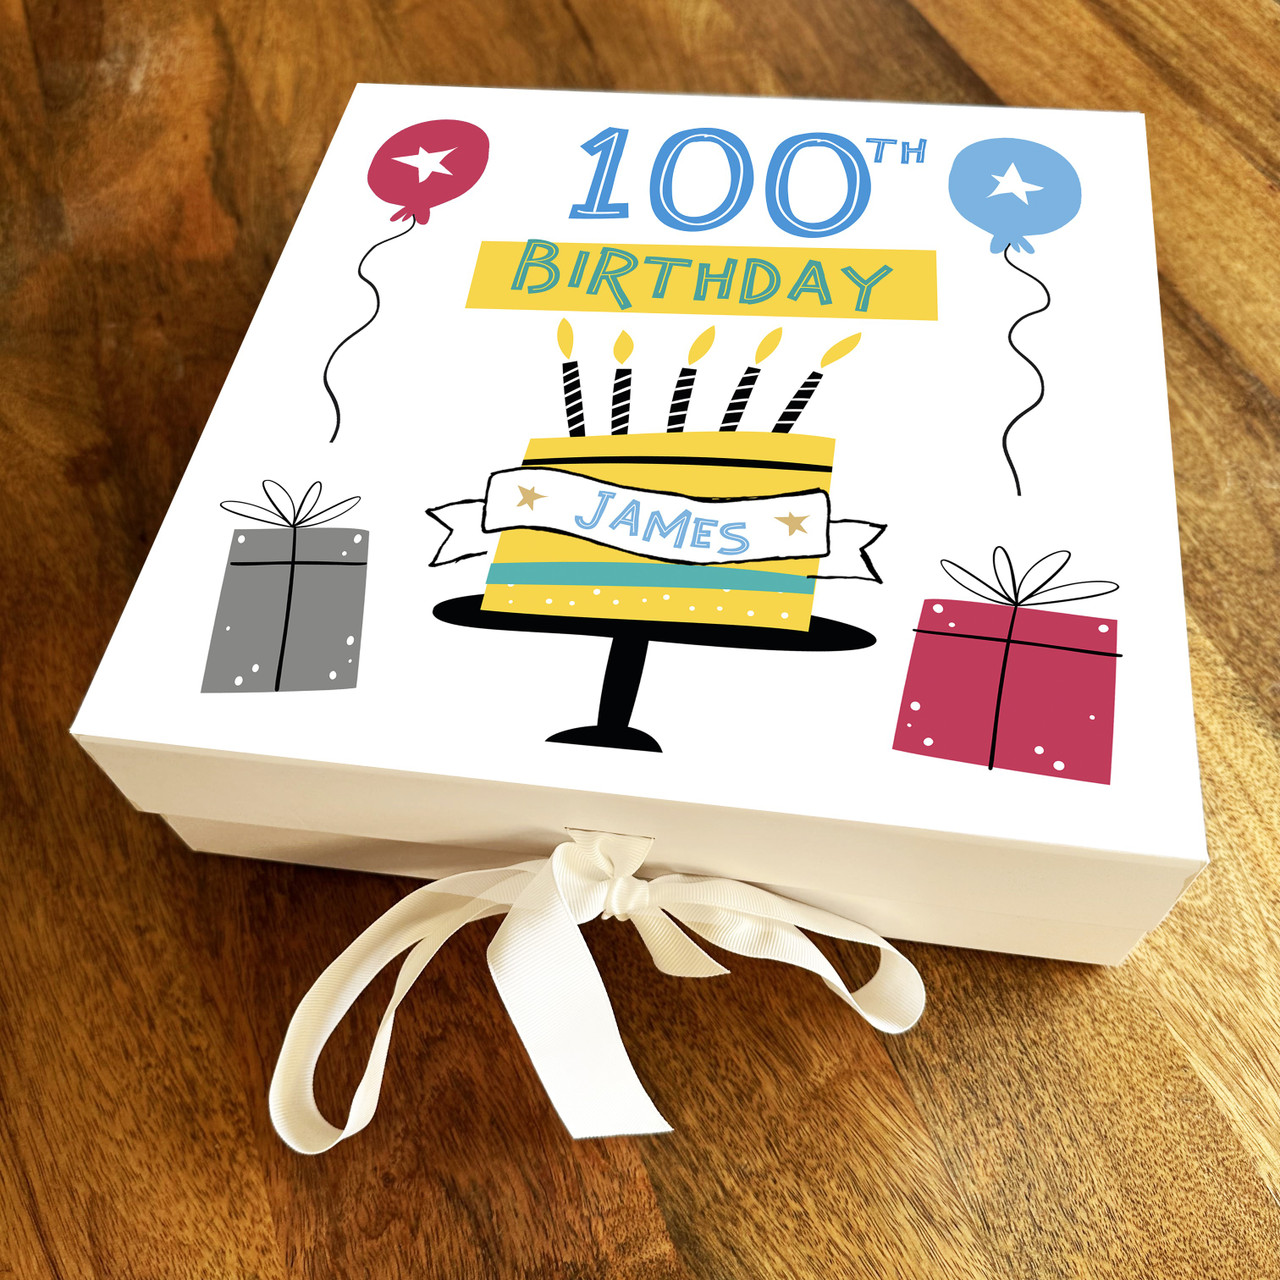 100th Birthday Gifts